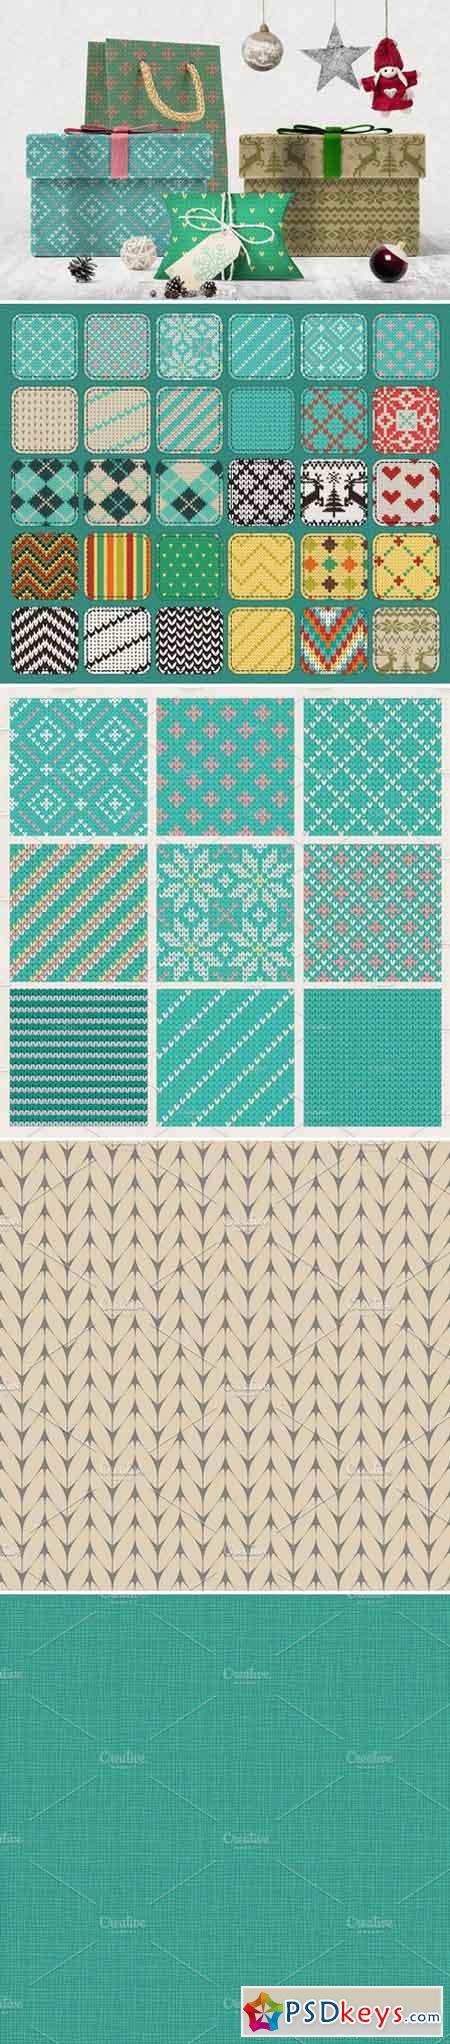 30 Seamless Knit Textures 122052